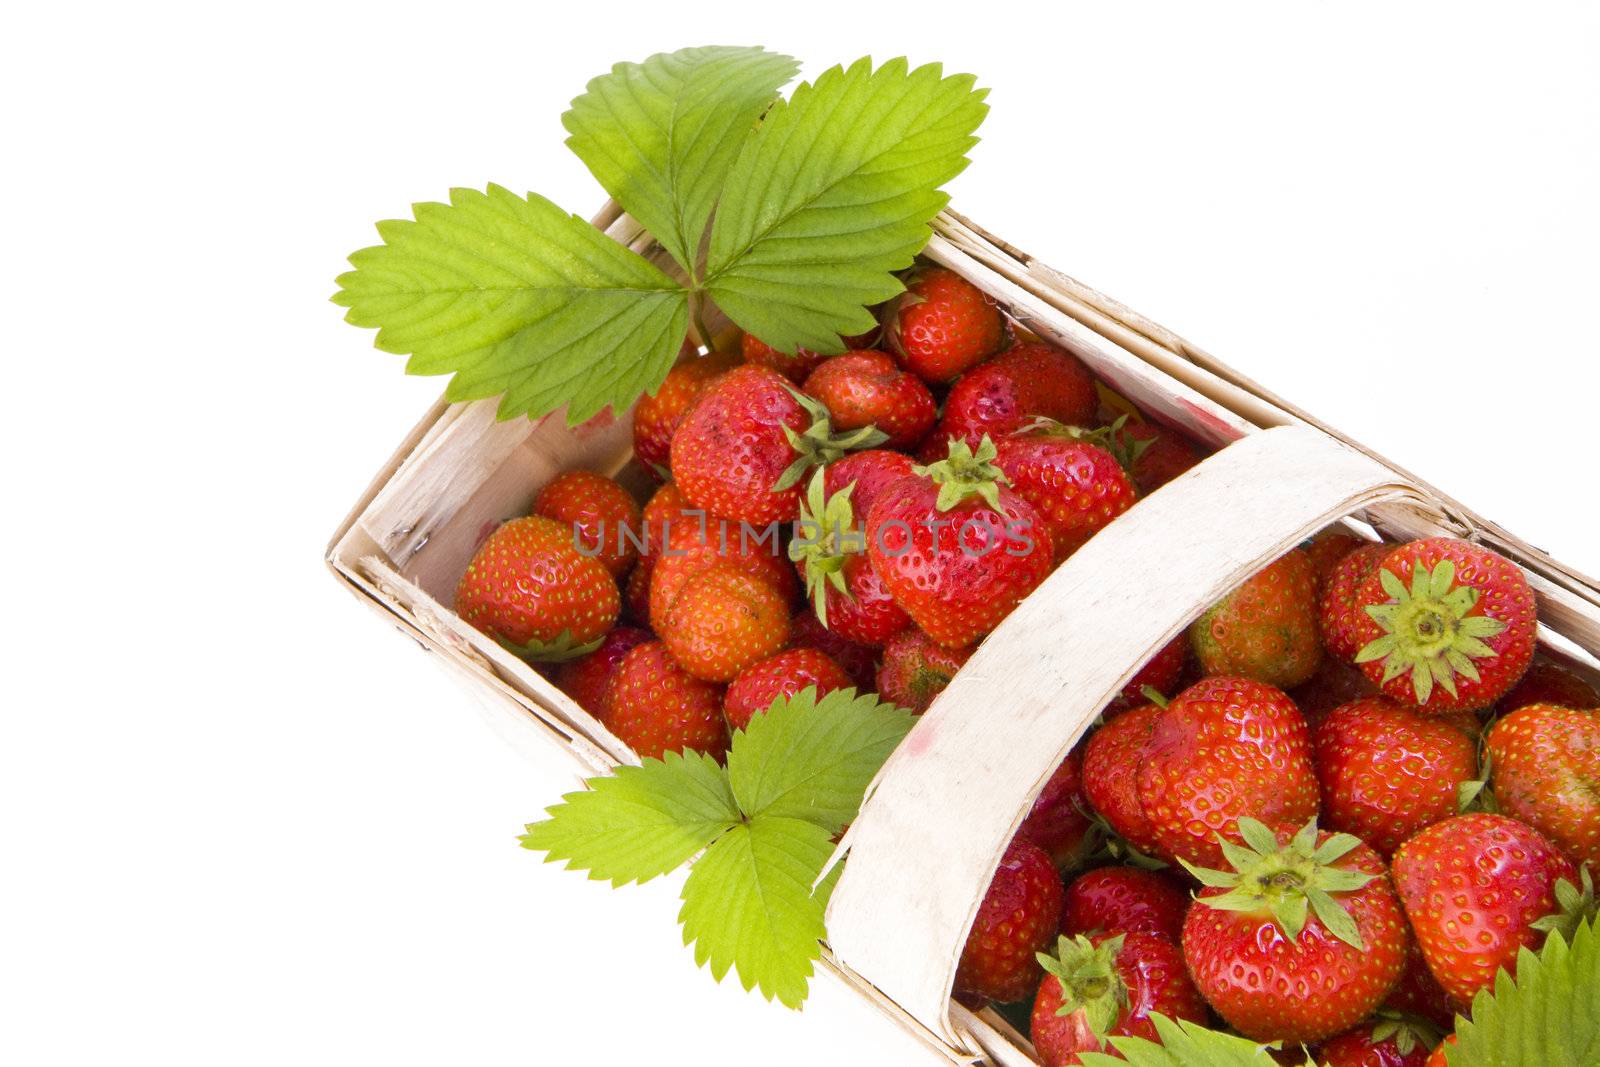 Strawberries in the basket by Gbuglok